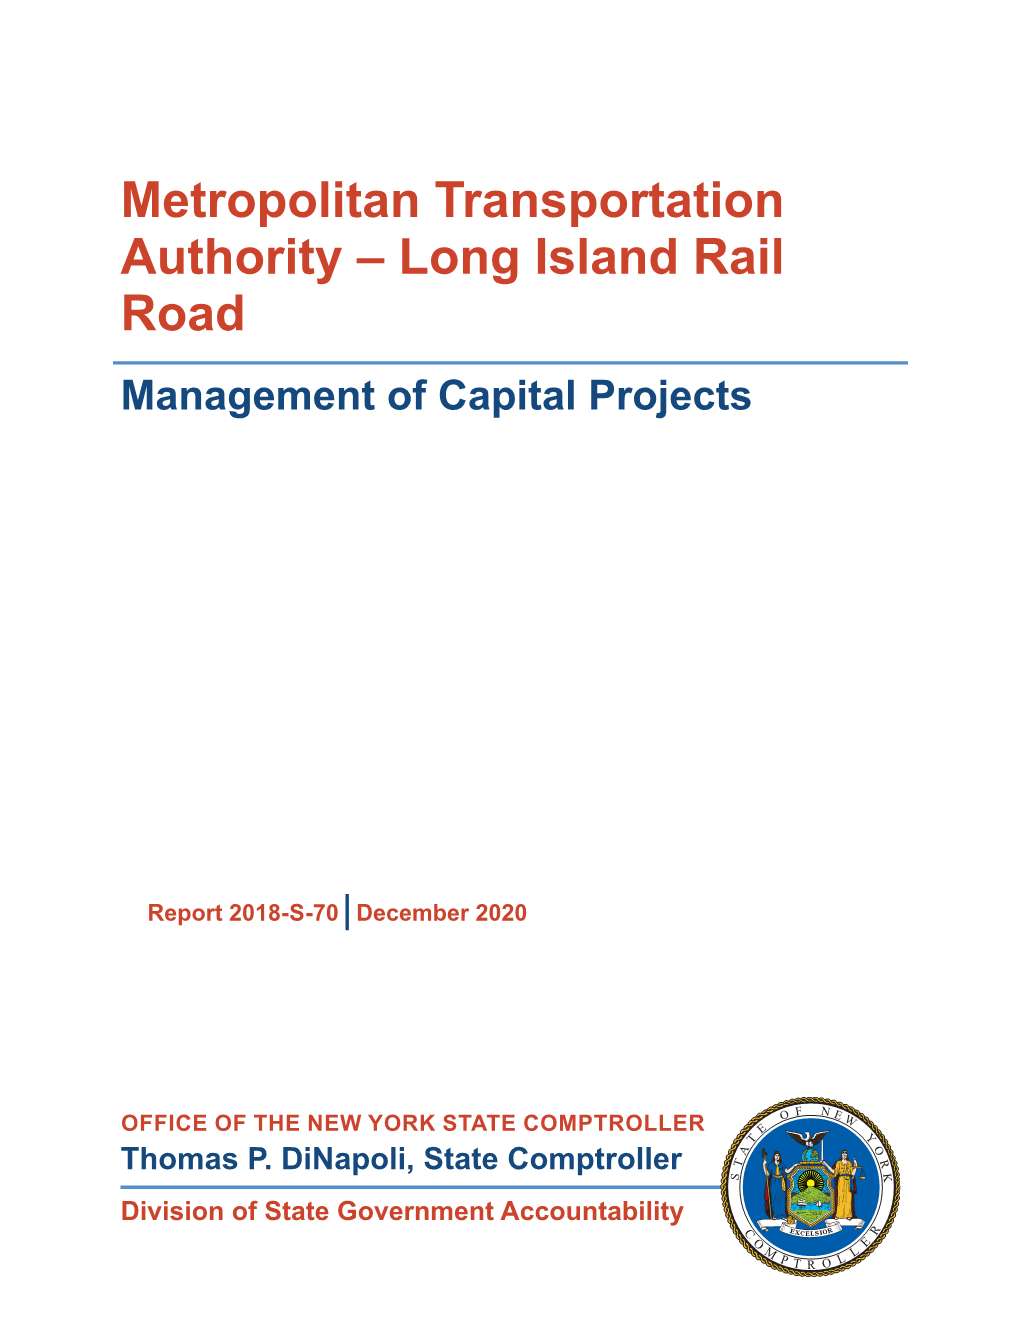 Metropolitan Transportation Authority – Long Island Rail Road Management of Capital Projects